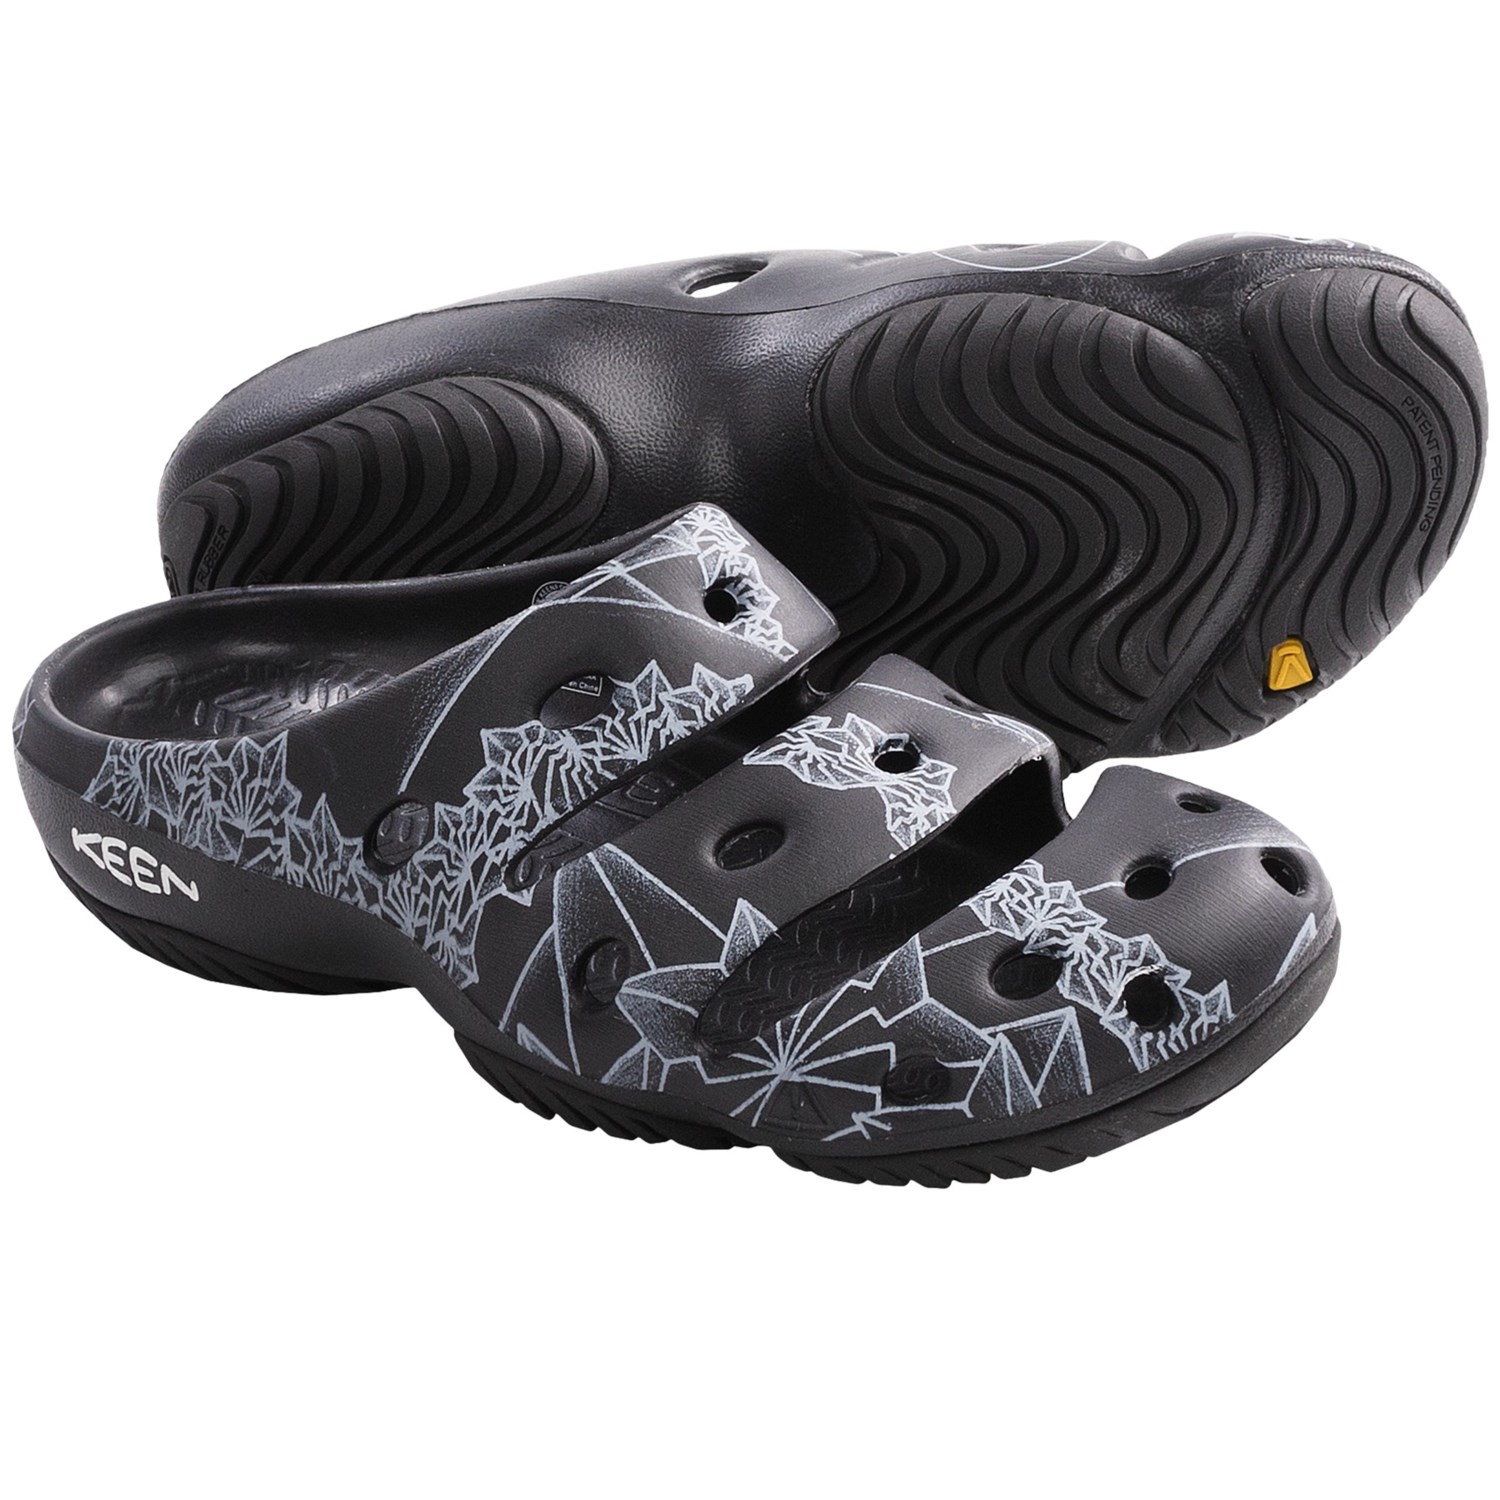 Keen Yogui Arts Sandals (For Women) in Sync Black